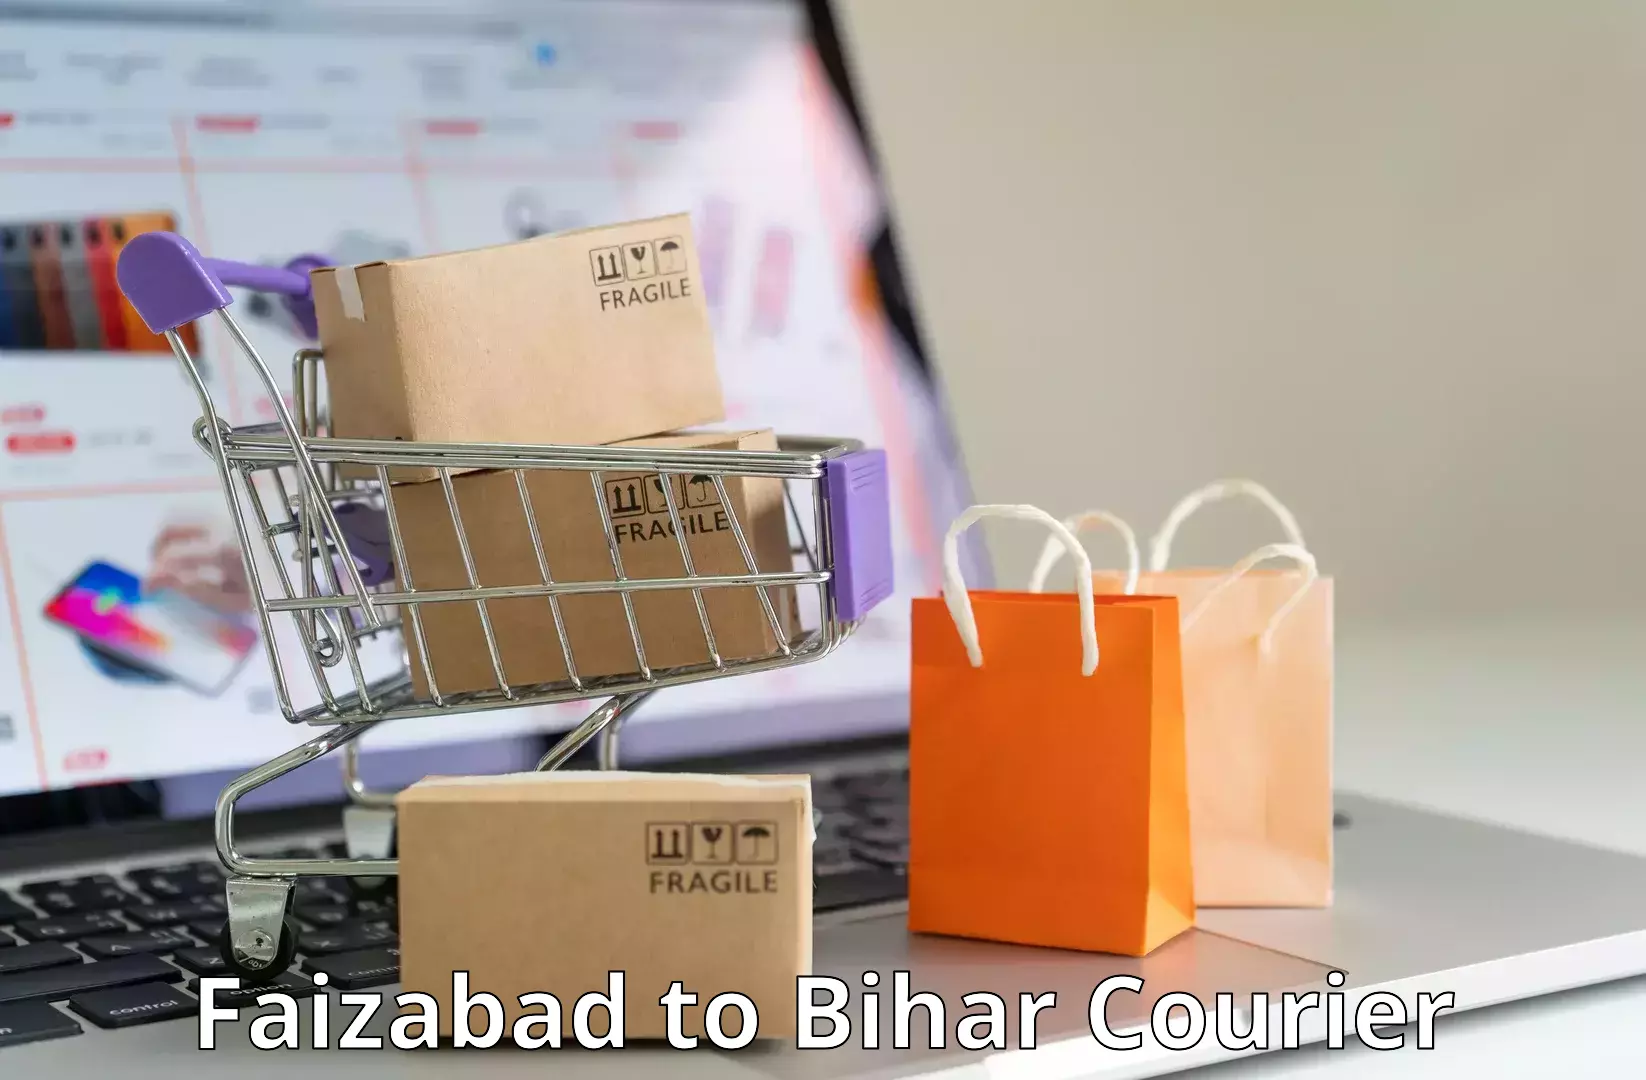 Digital courier platforms Faizabad to Dhaka